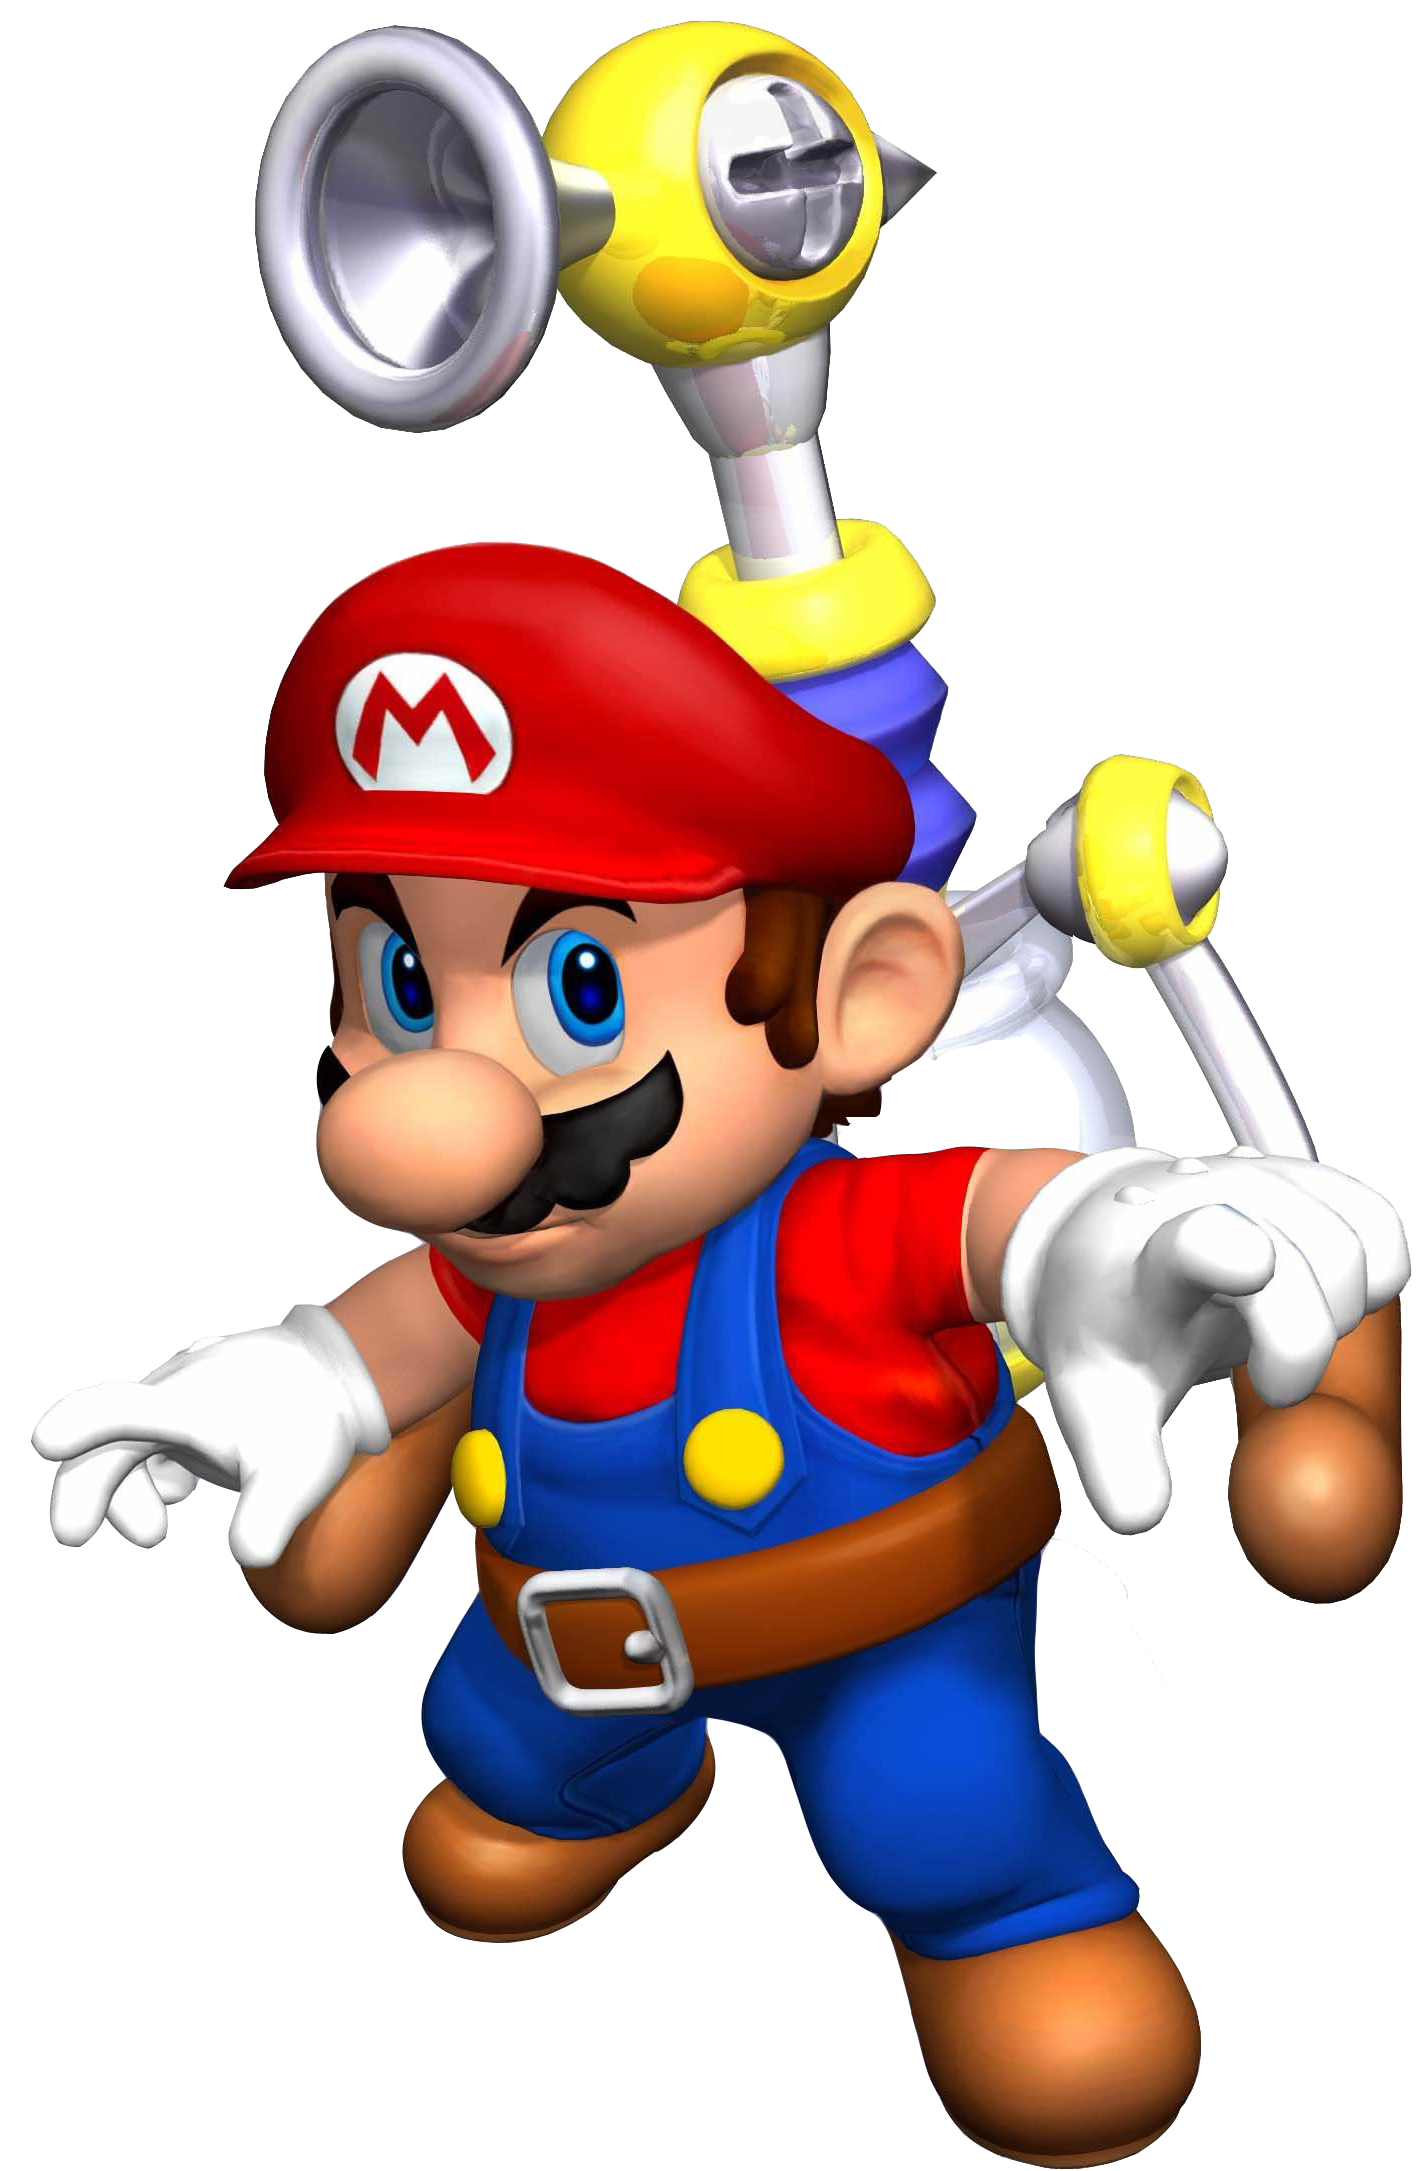 Super Mario Sunshine Pics, Video Game Collection